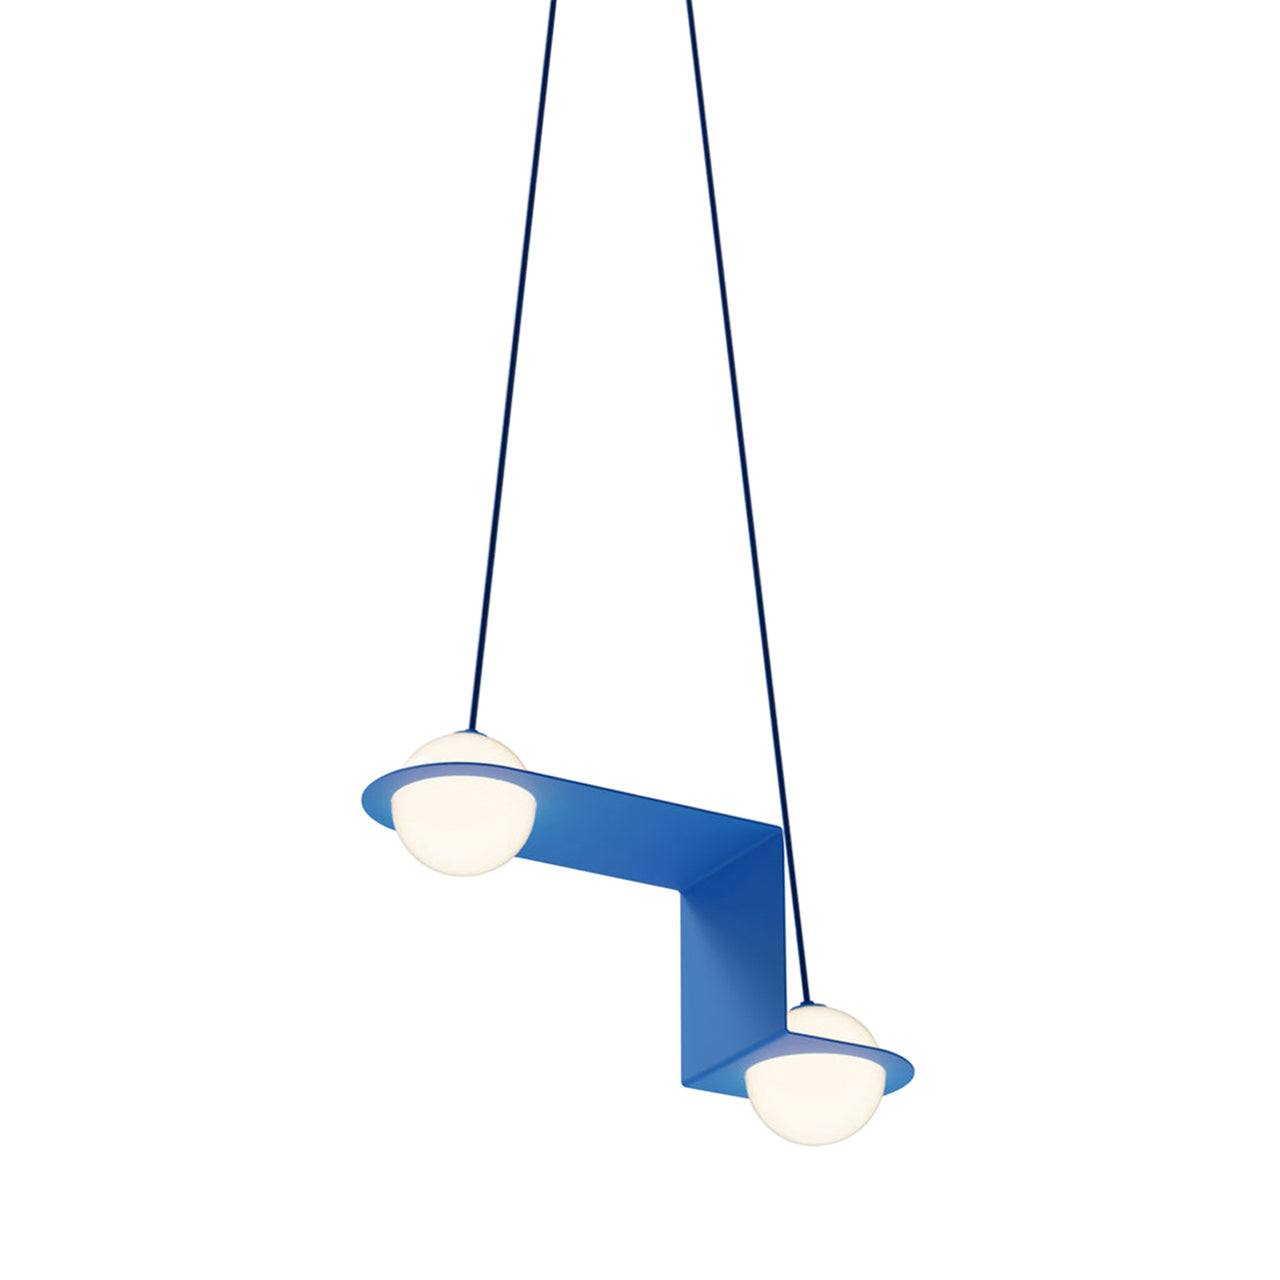 Laurent 06 Suspension Lamp: Blue + Blue + Angled Wires